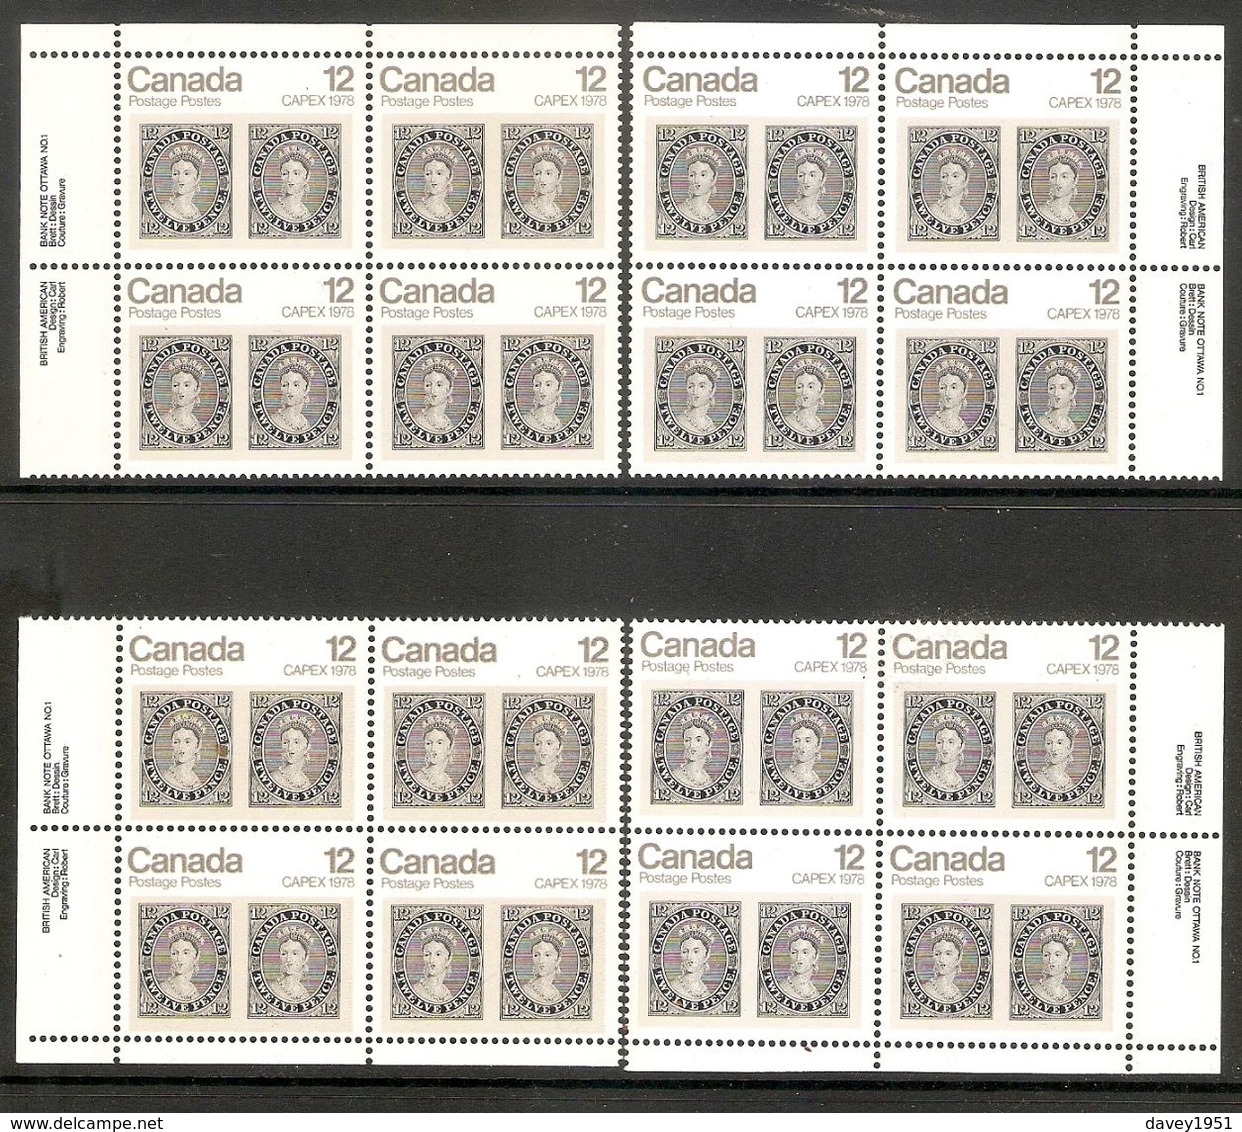 006370 Canada 1978 Capex 12c Plate Block 1 Set MNH - Plate Number & Inscriptions